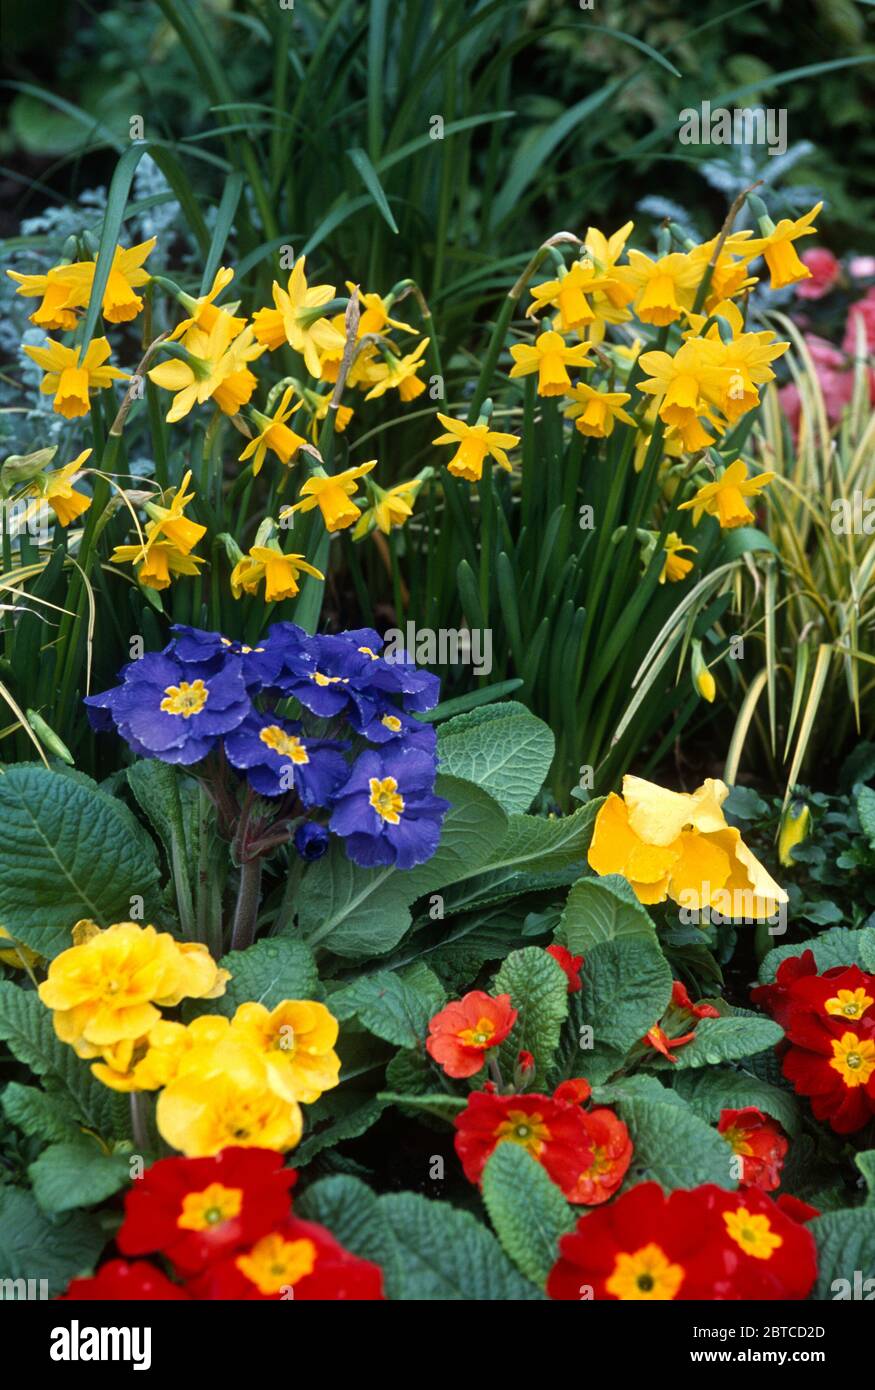 Primrose with Daffodils Stock Photo